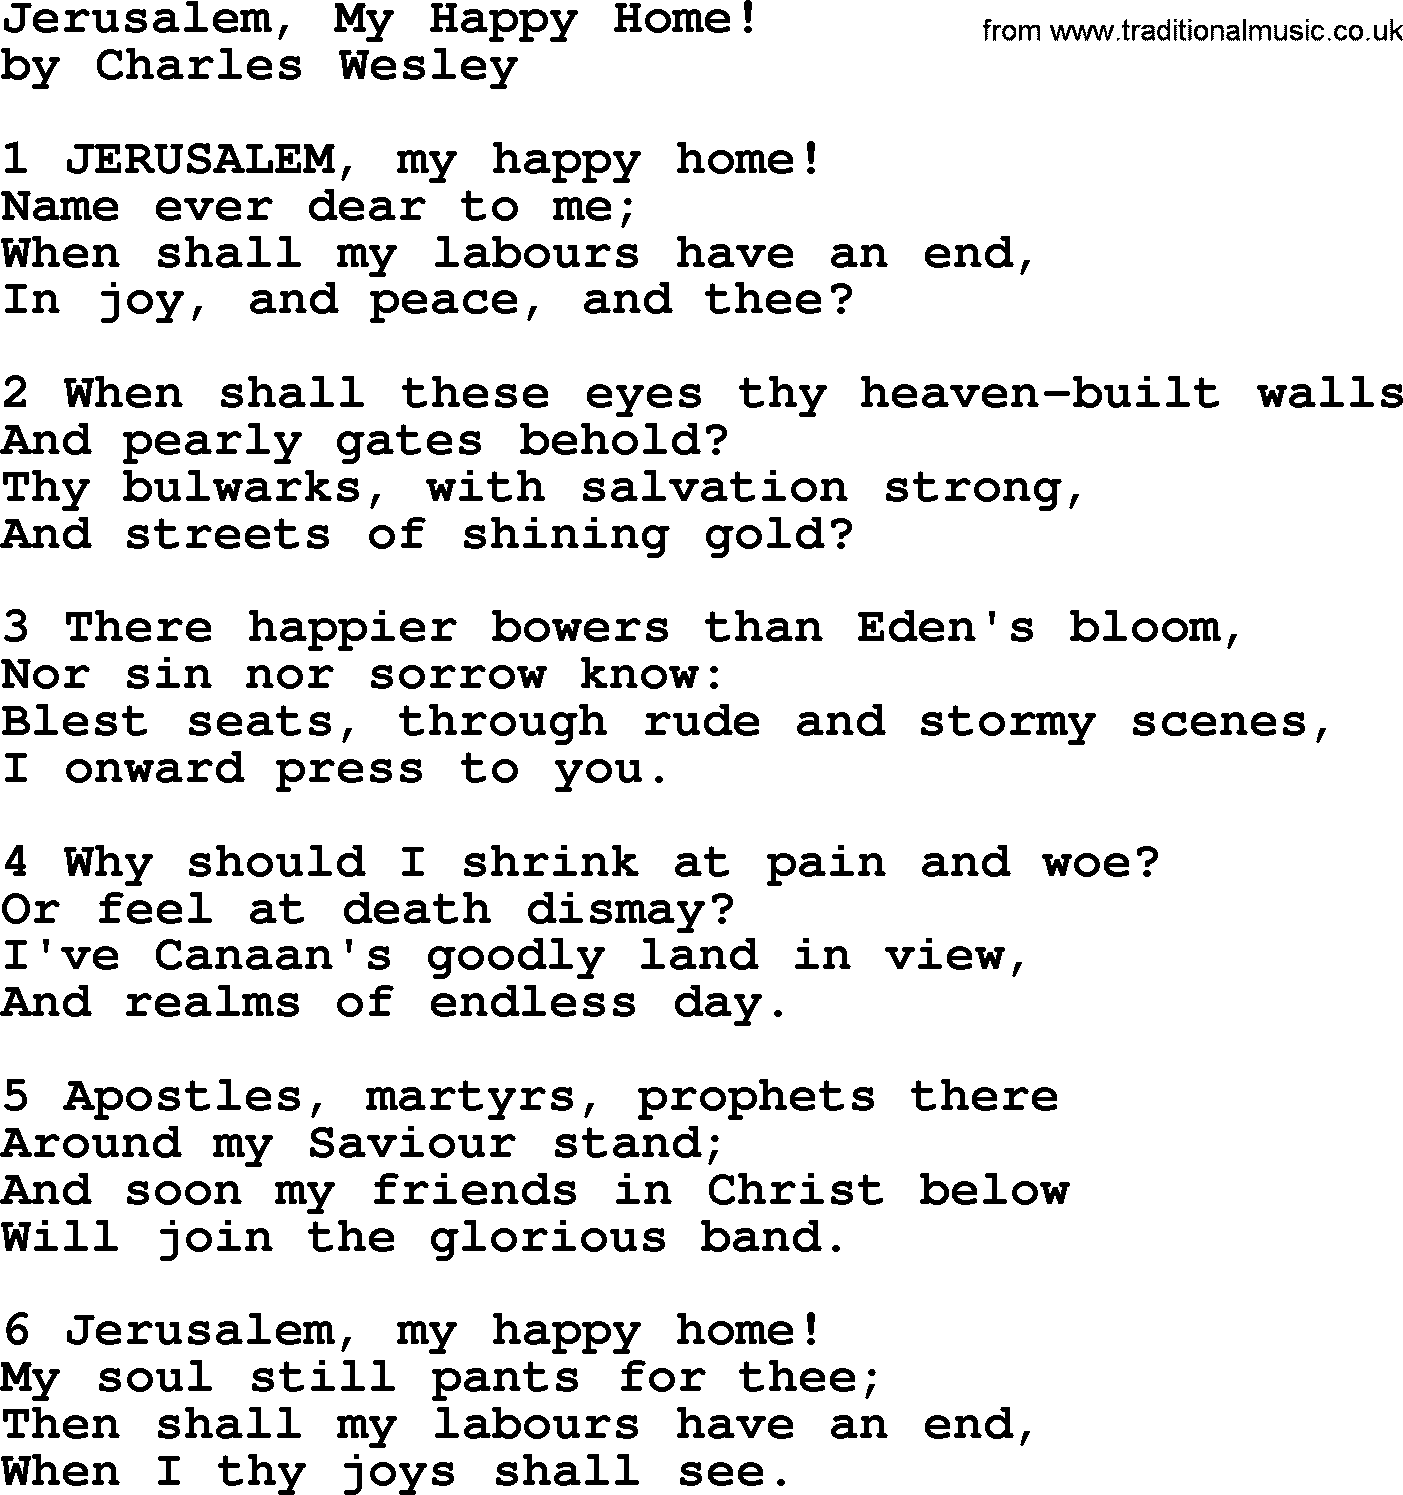 Charles Wesley hymn: Jerusalem, My Happy Home!, lyrics